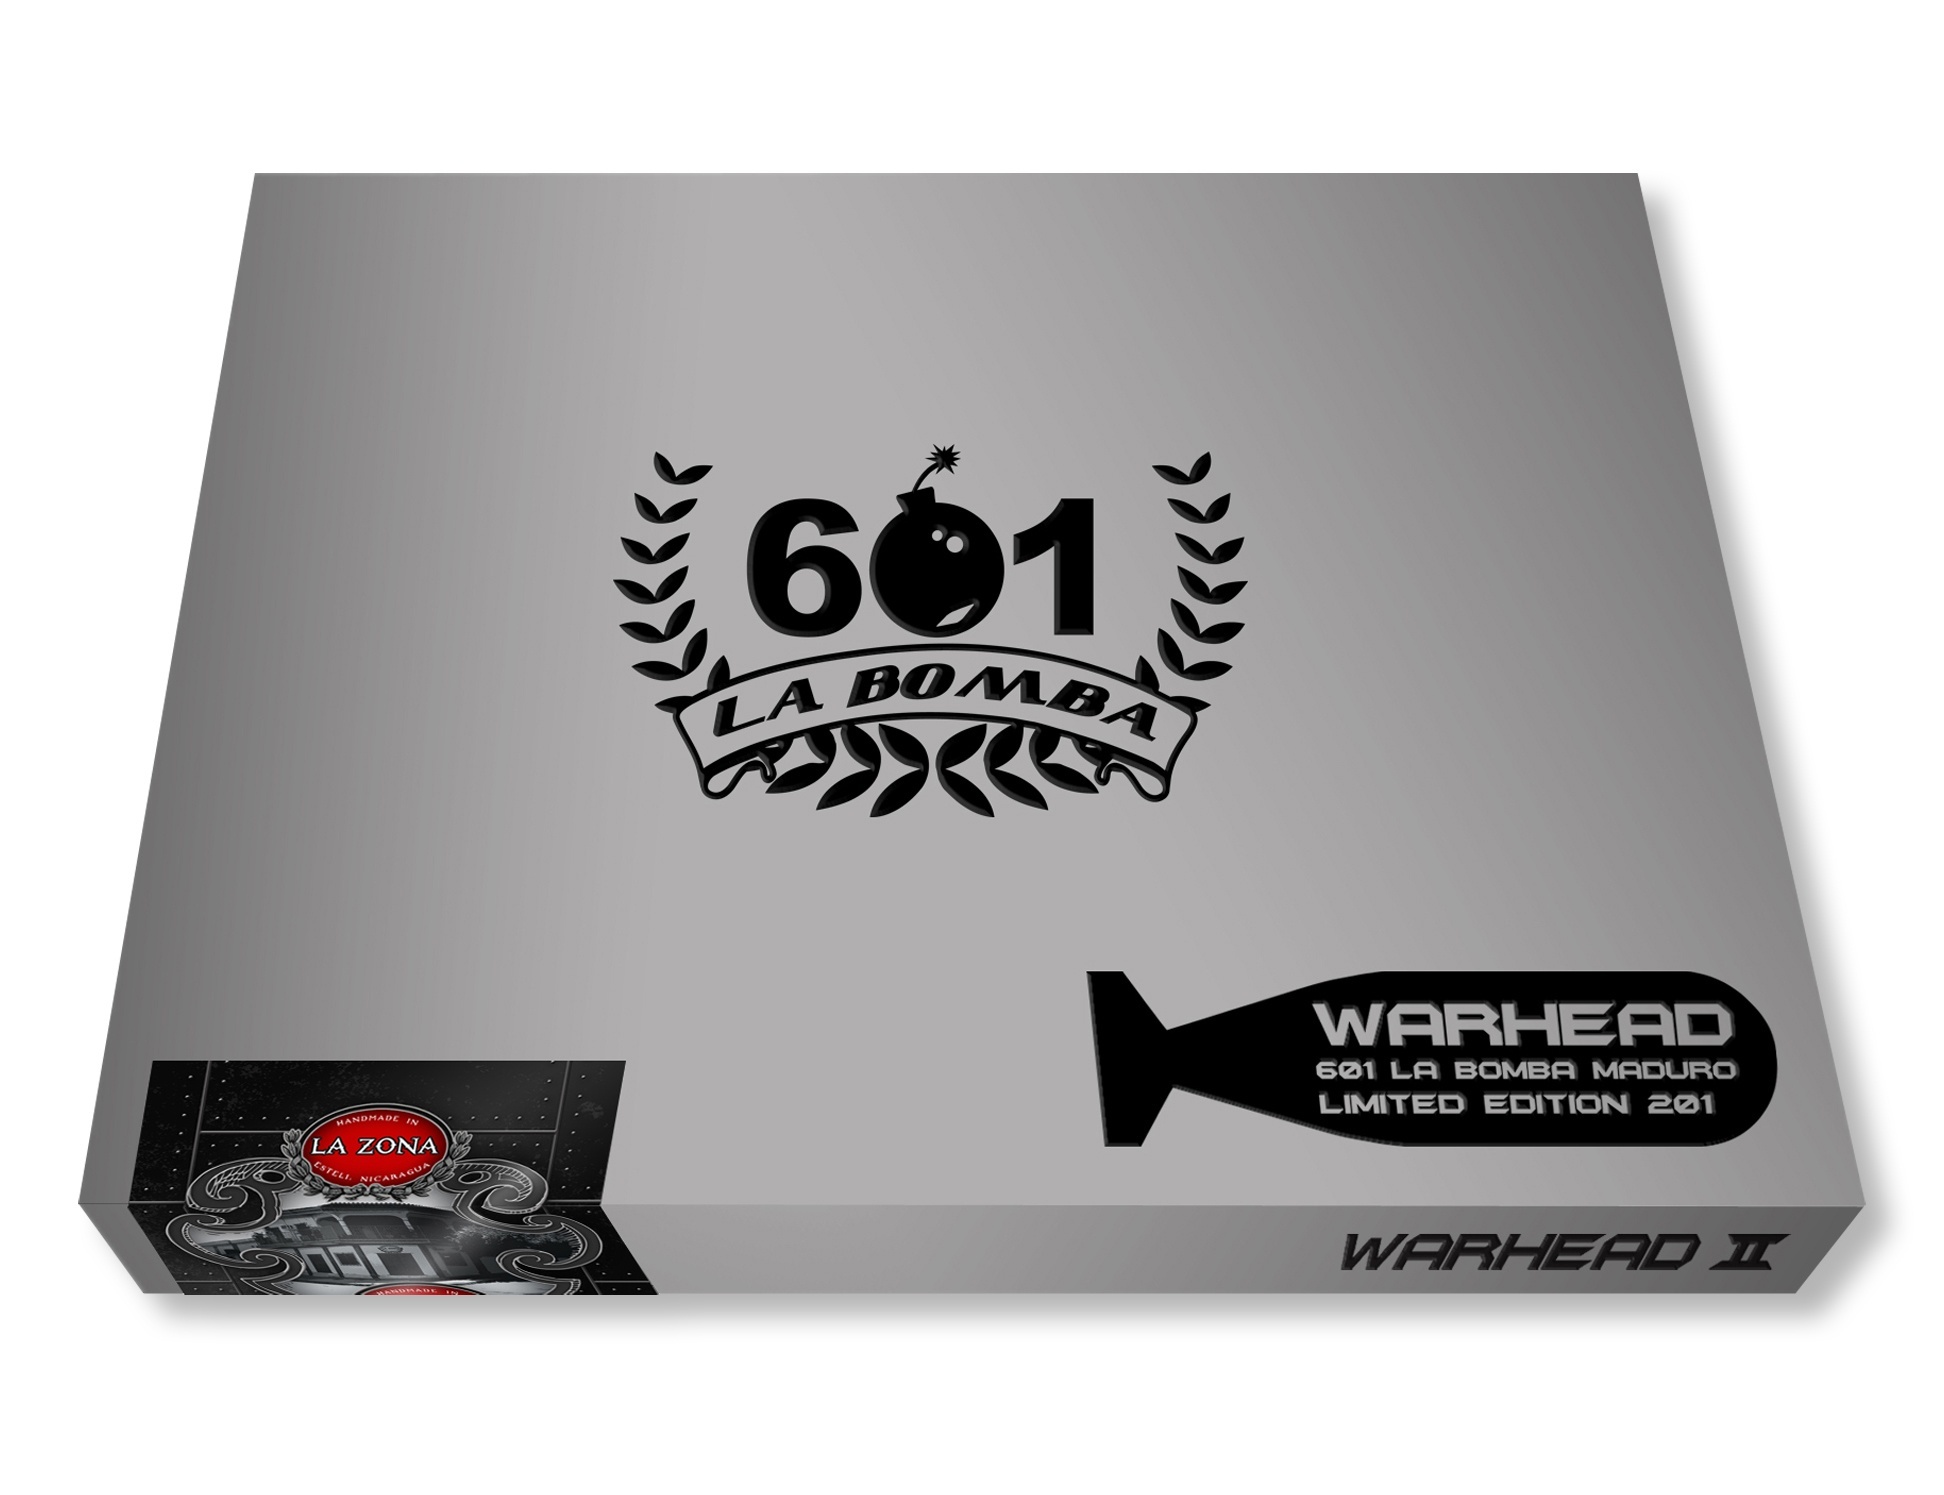 601 La Bomba Warhead 2014 Box.jpg